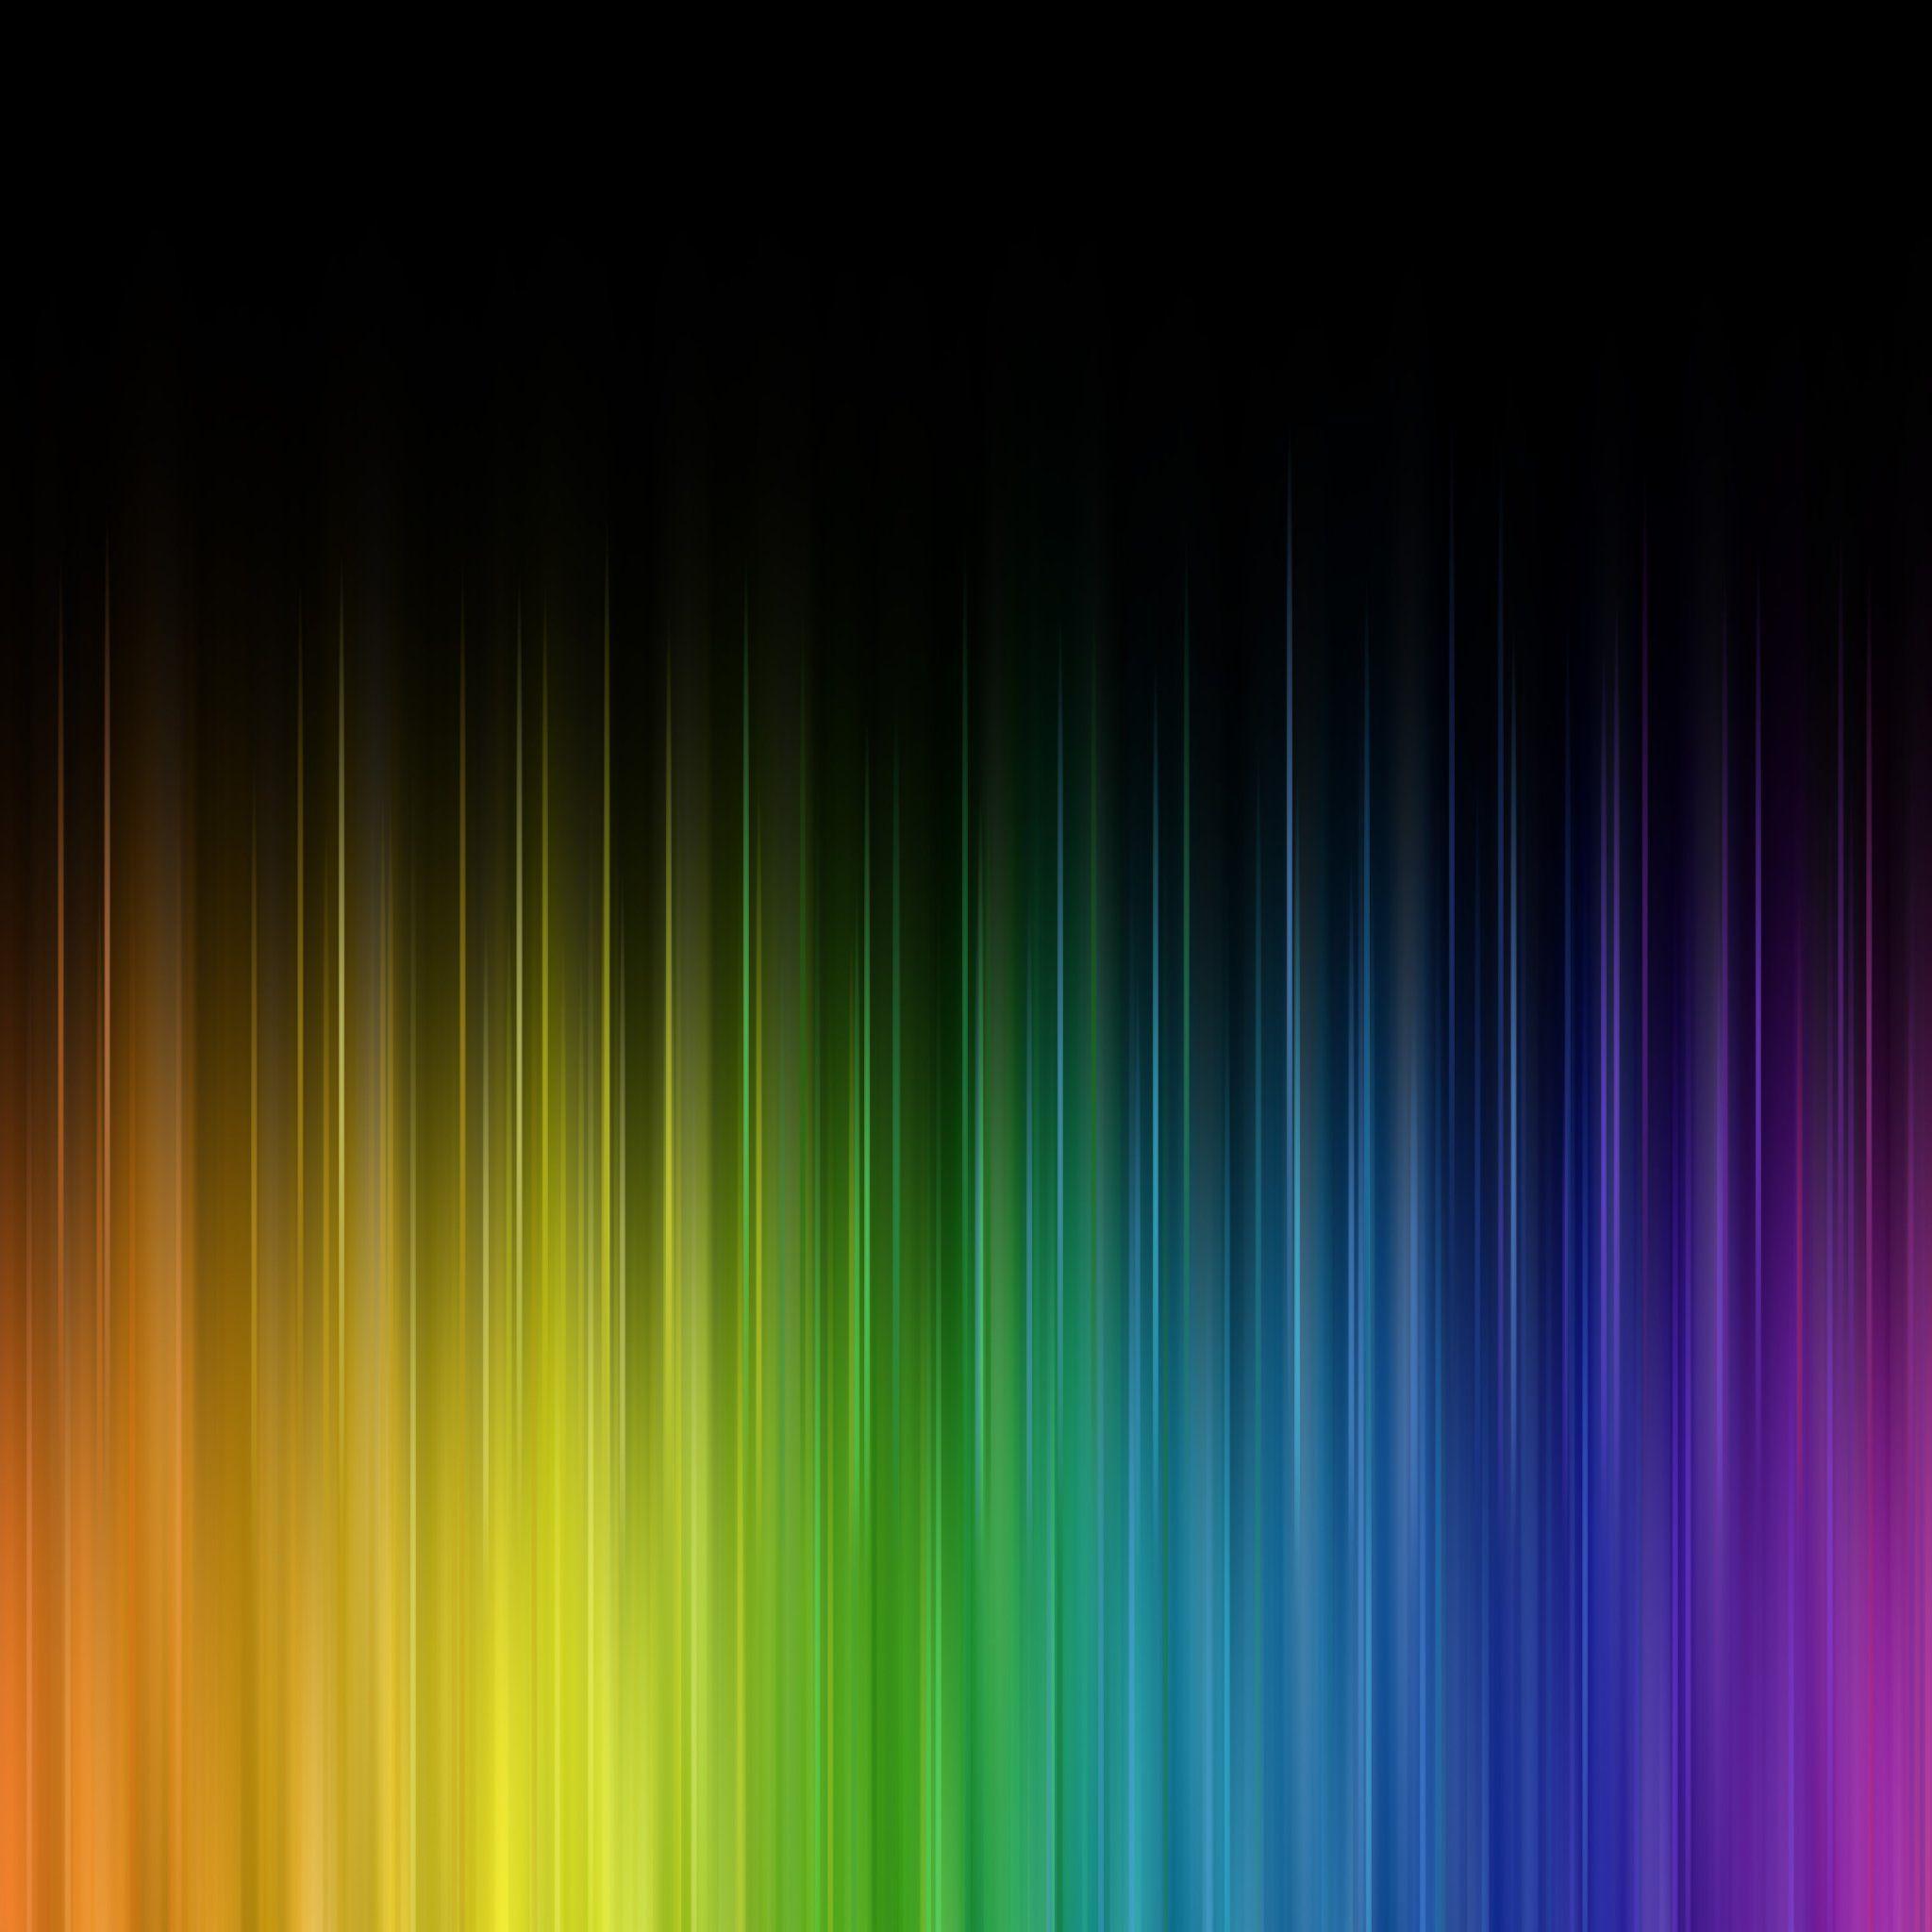 Black Rainbow Wallpapers - Top Free Black Rainbow Backgrounds